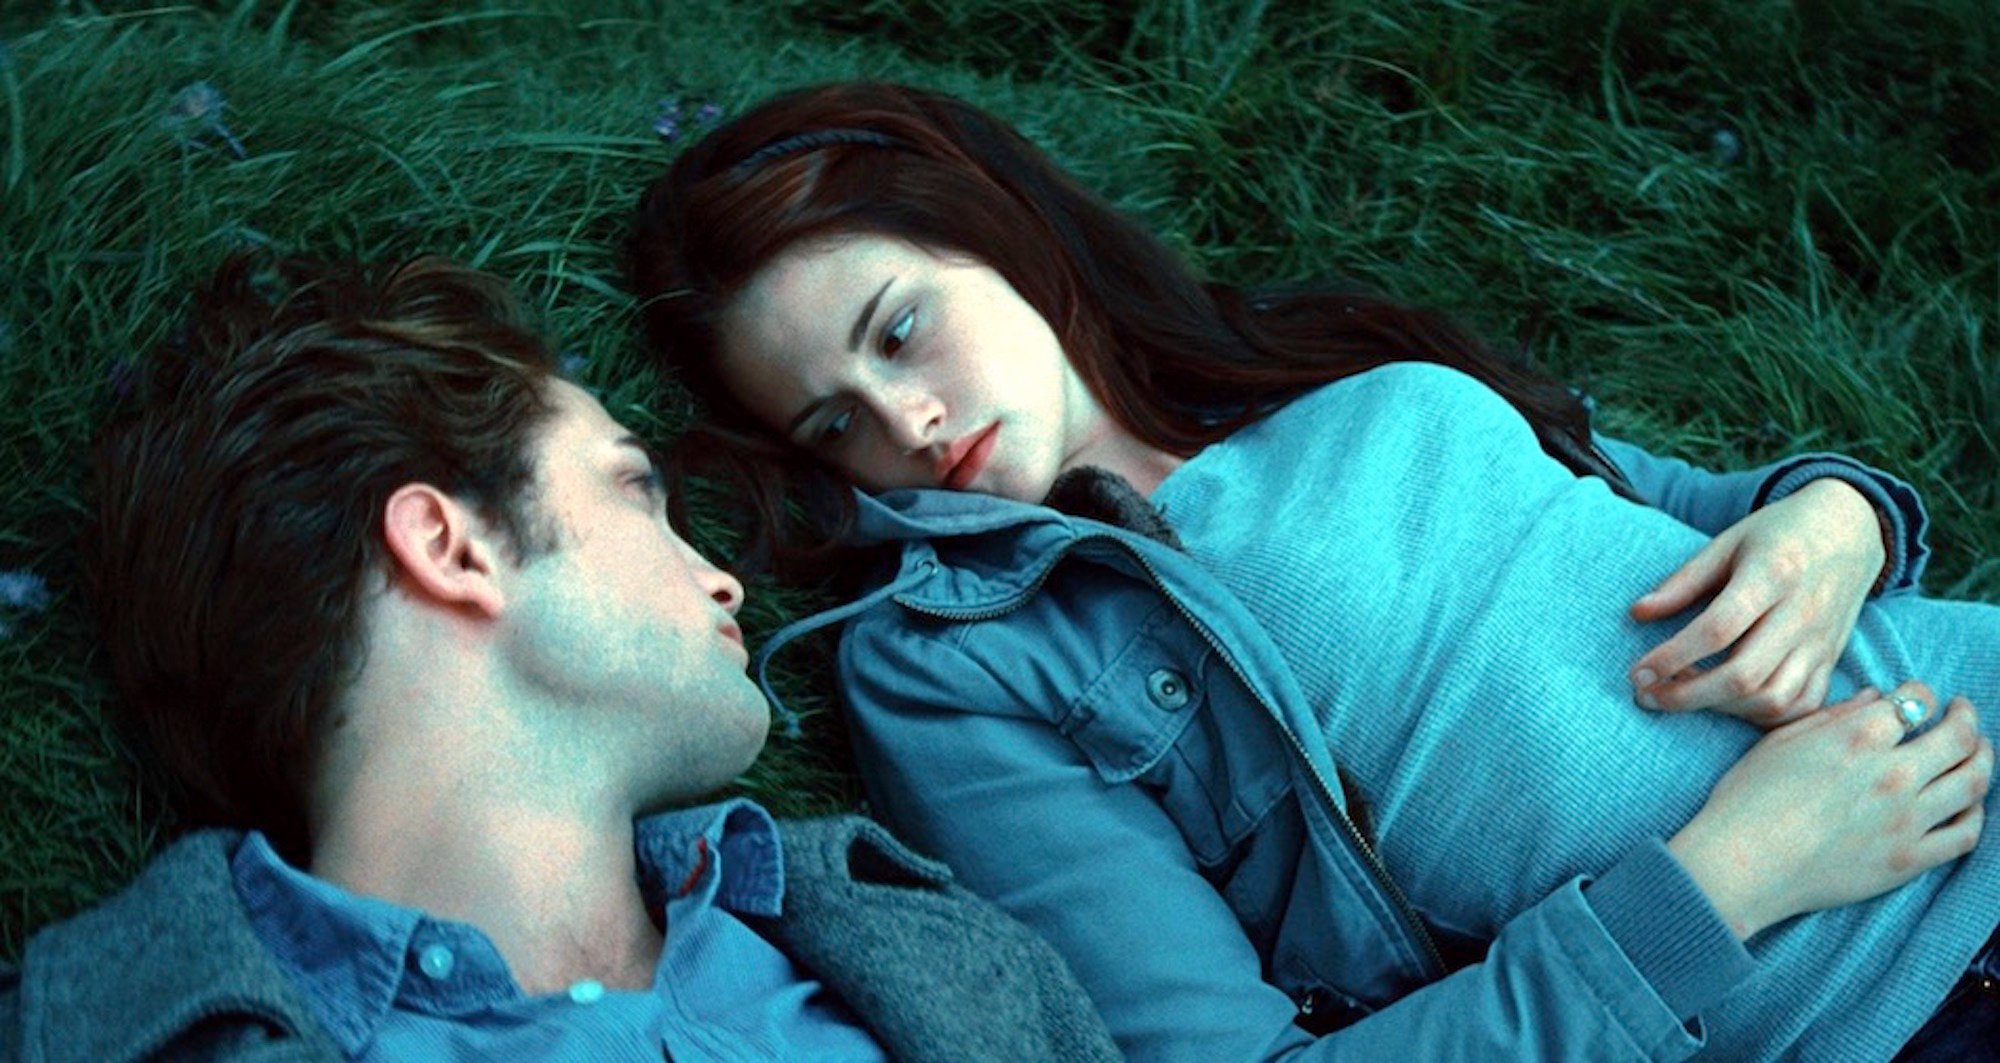 Robert Pattinson as Edward Cullen and Kristen Stewart as Bella Swan in 'Twilight'